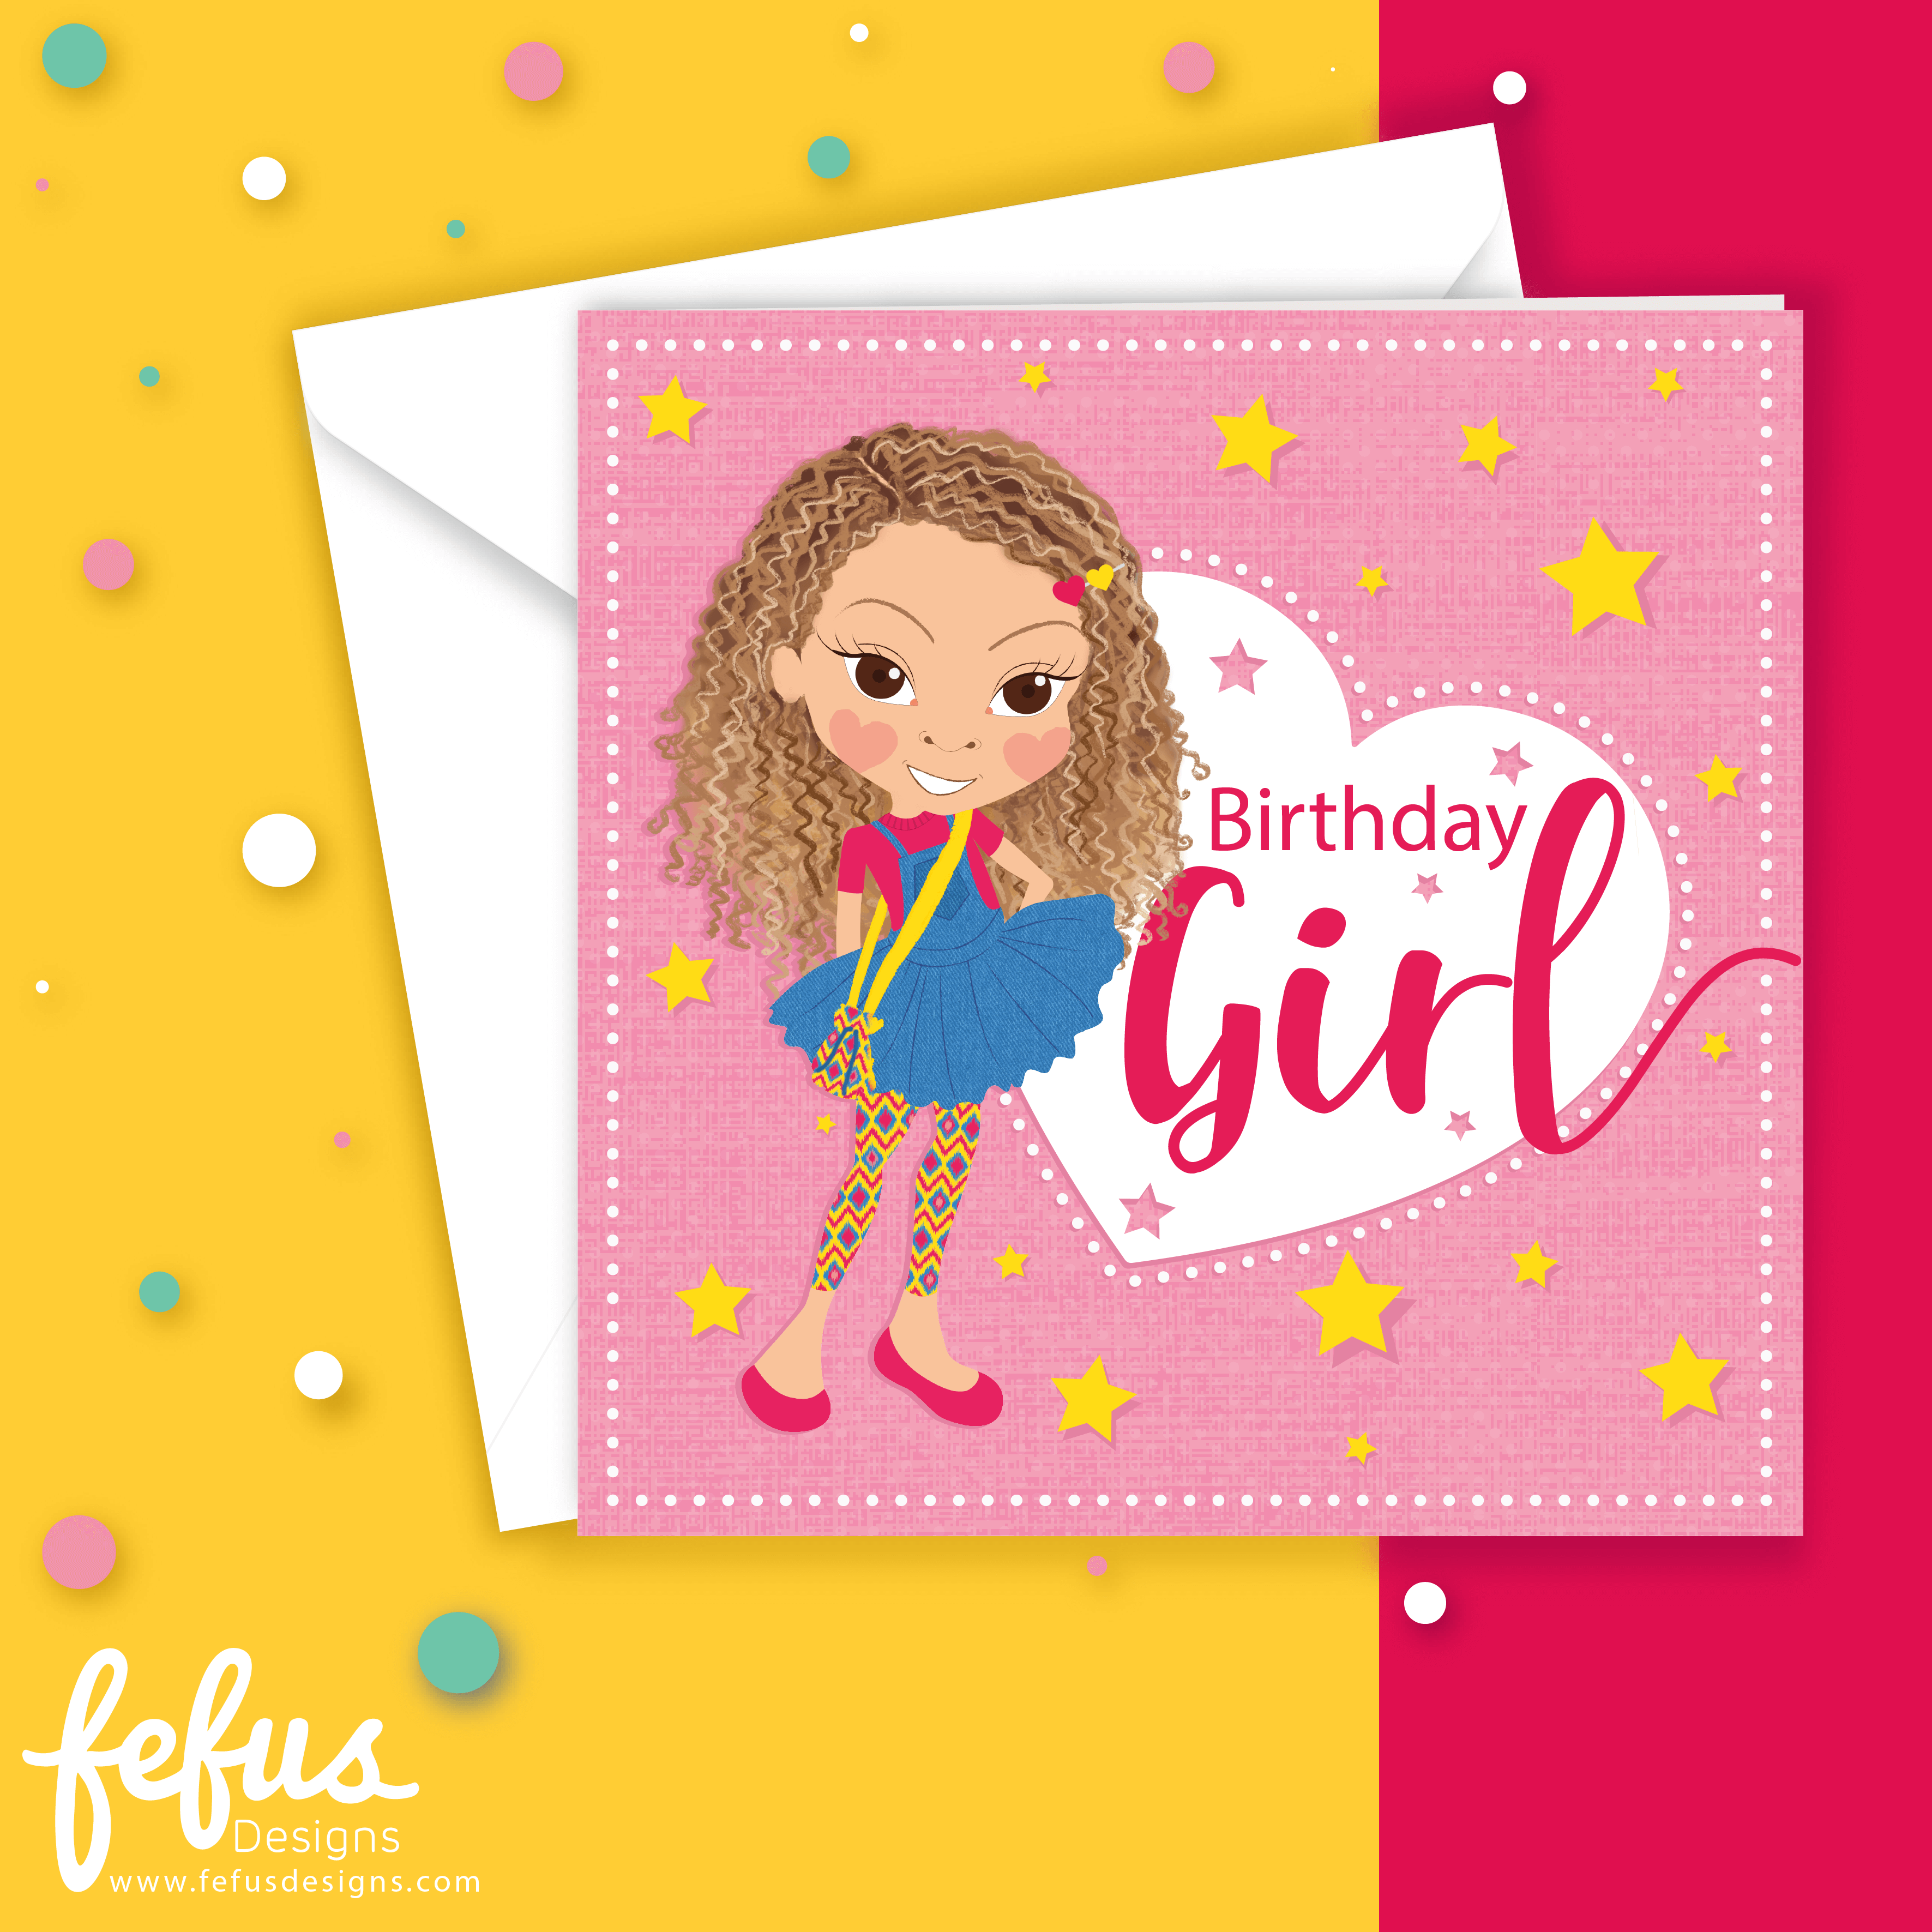 Georgie - Mixed Girl Magic - Birthday Card | Fefus designs